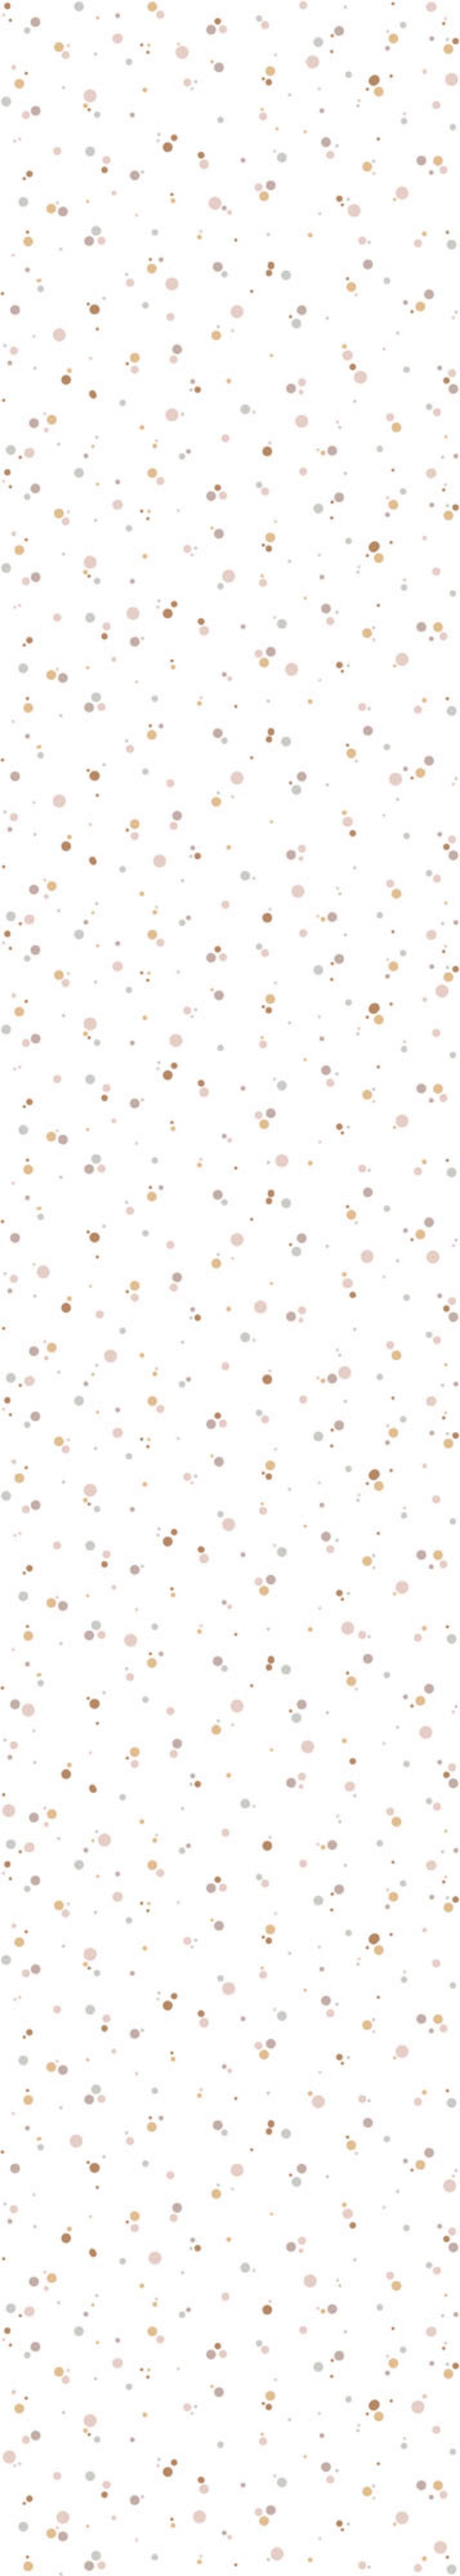 SIMPLE Dots Minimini Cinnamon Powder Pink Wallpaper